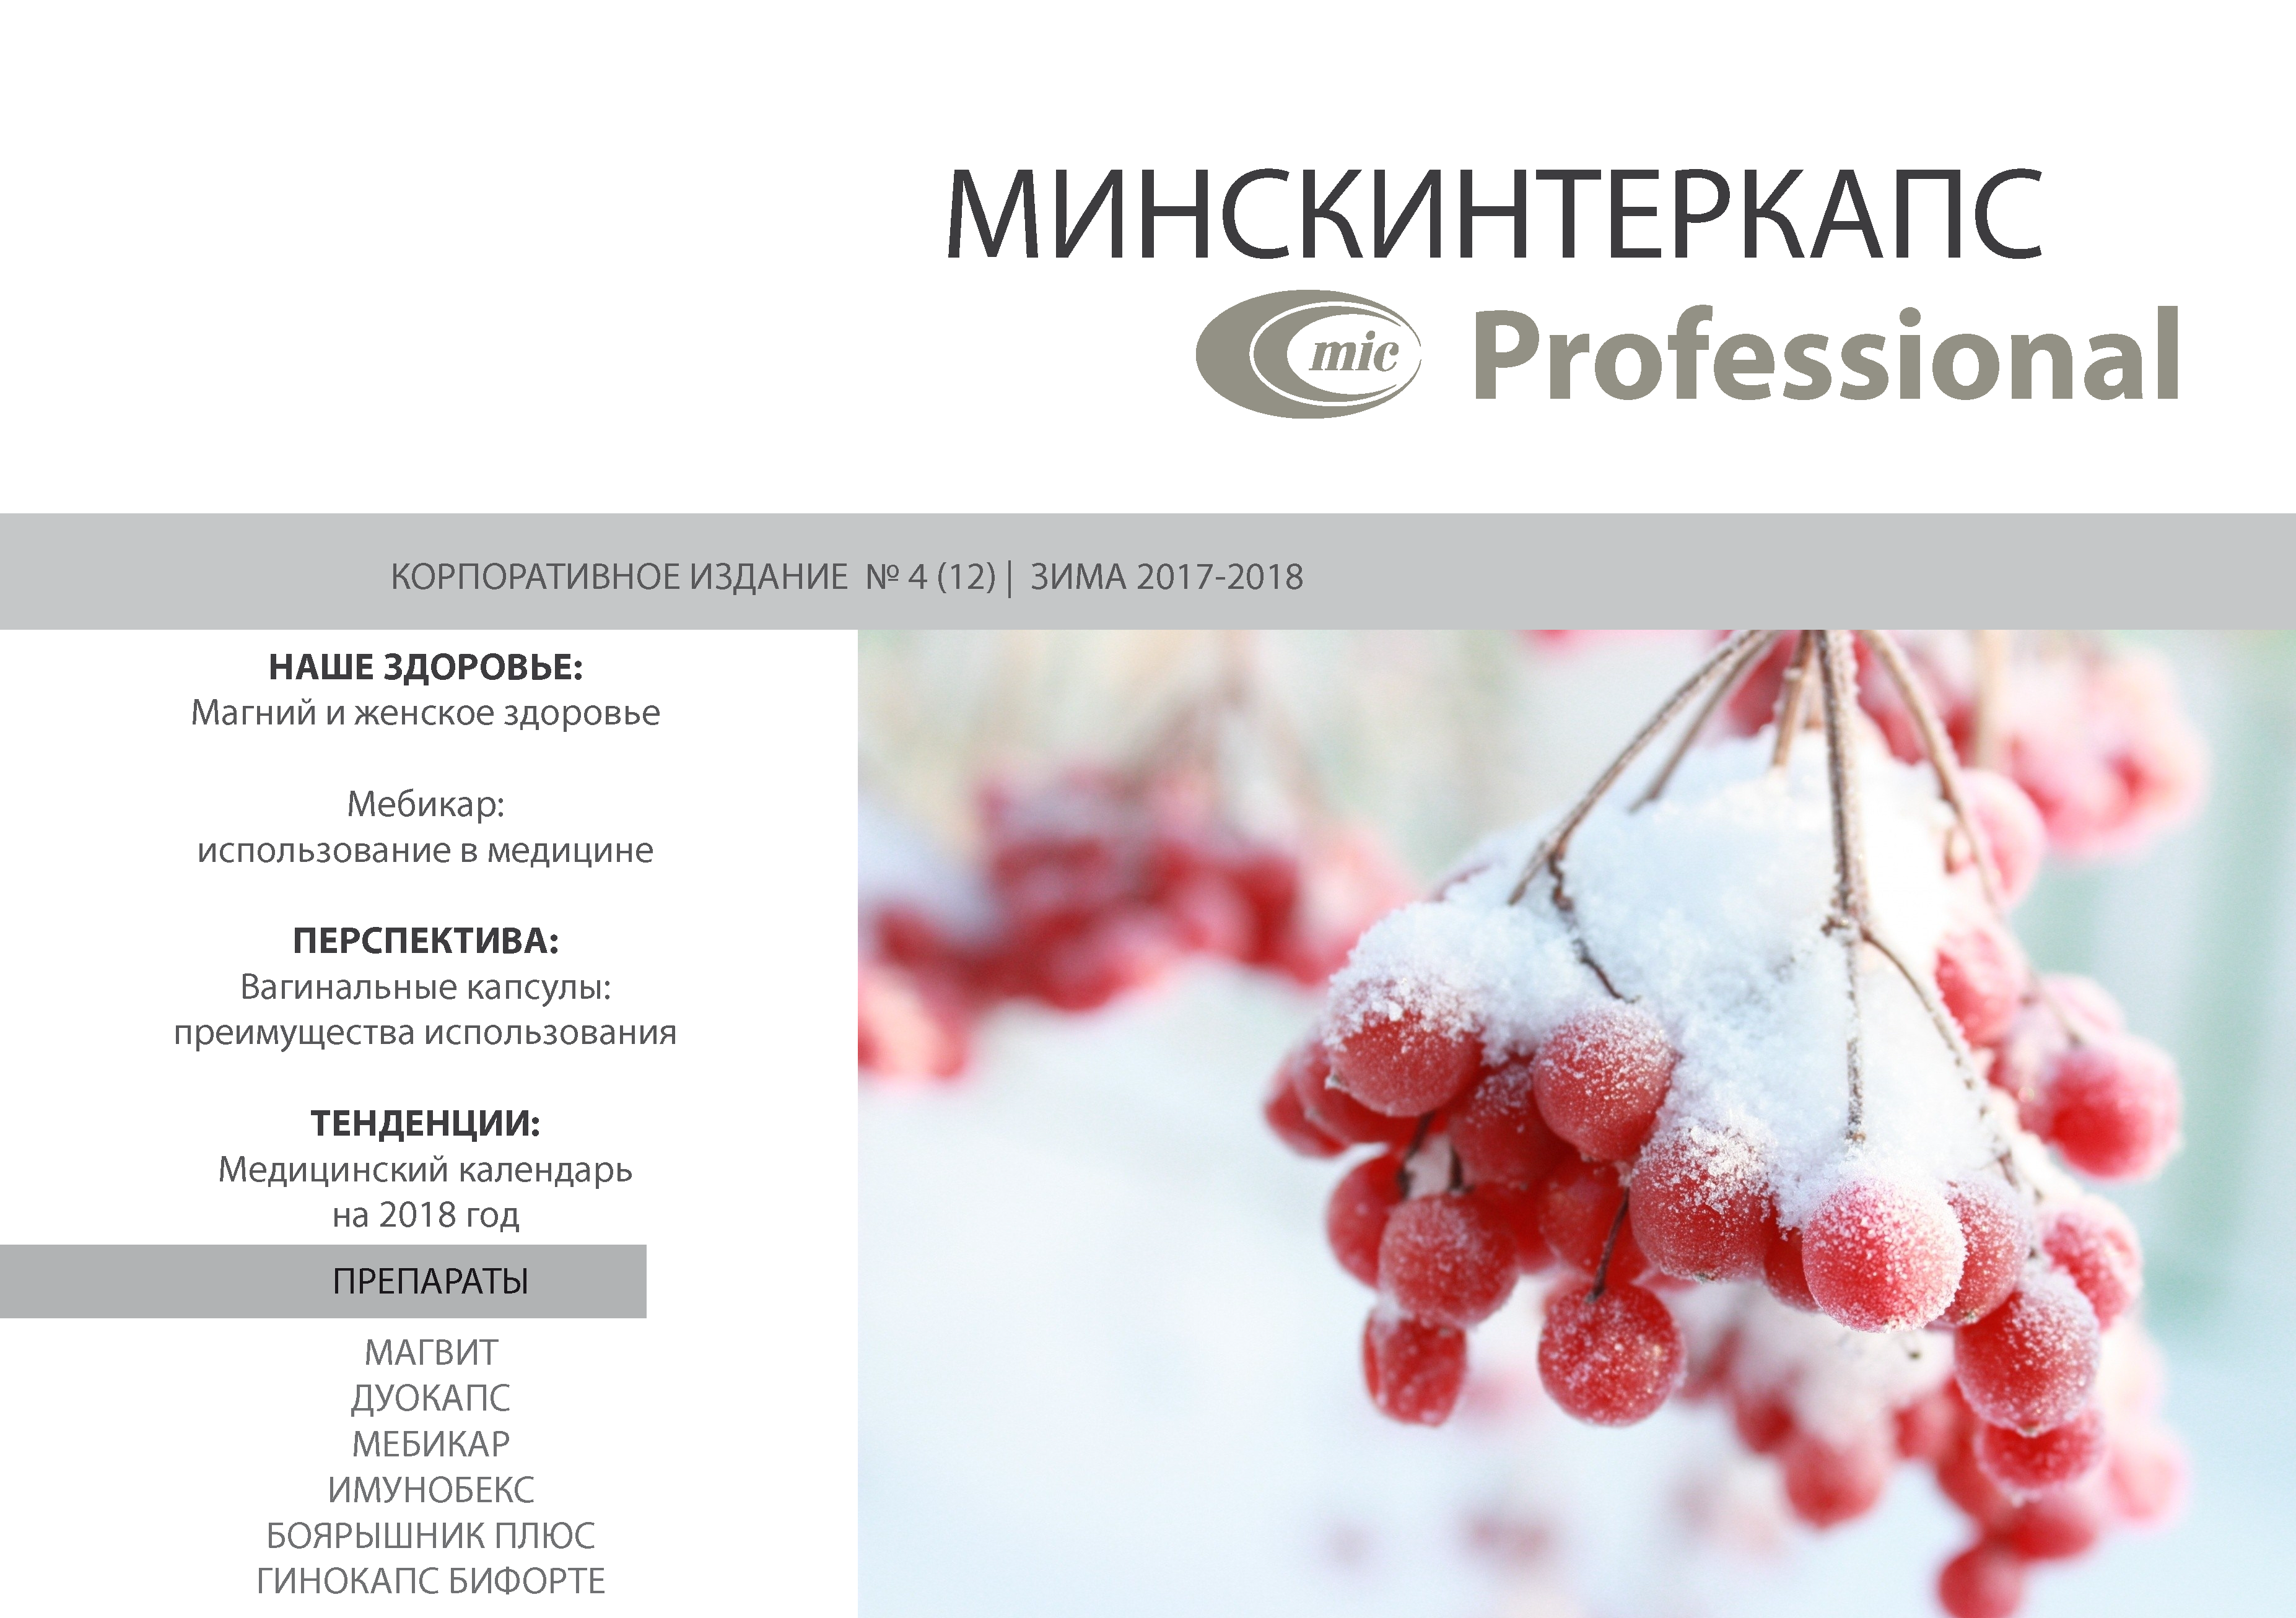 Зимний номер корпоративного издания Минскинтеркапс Professional 